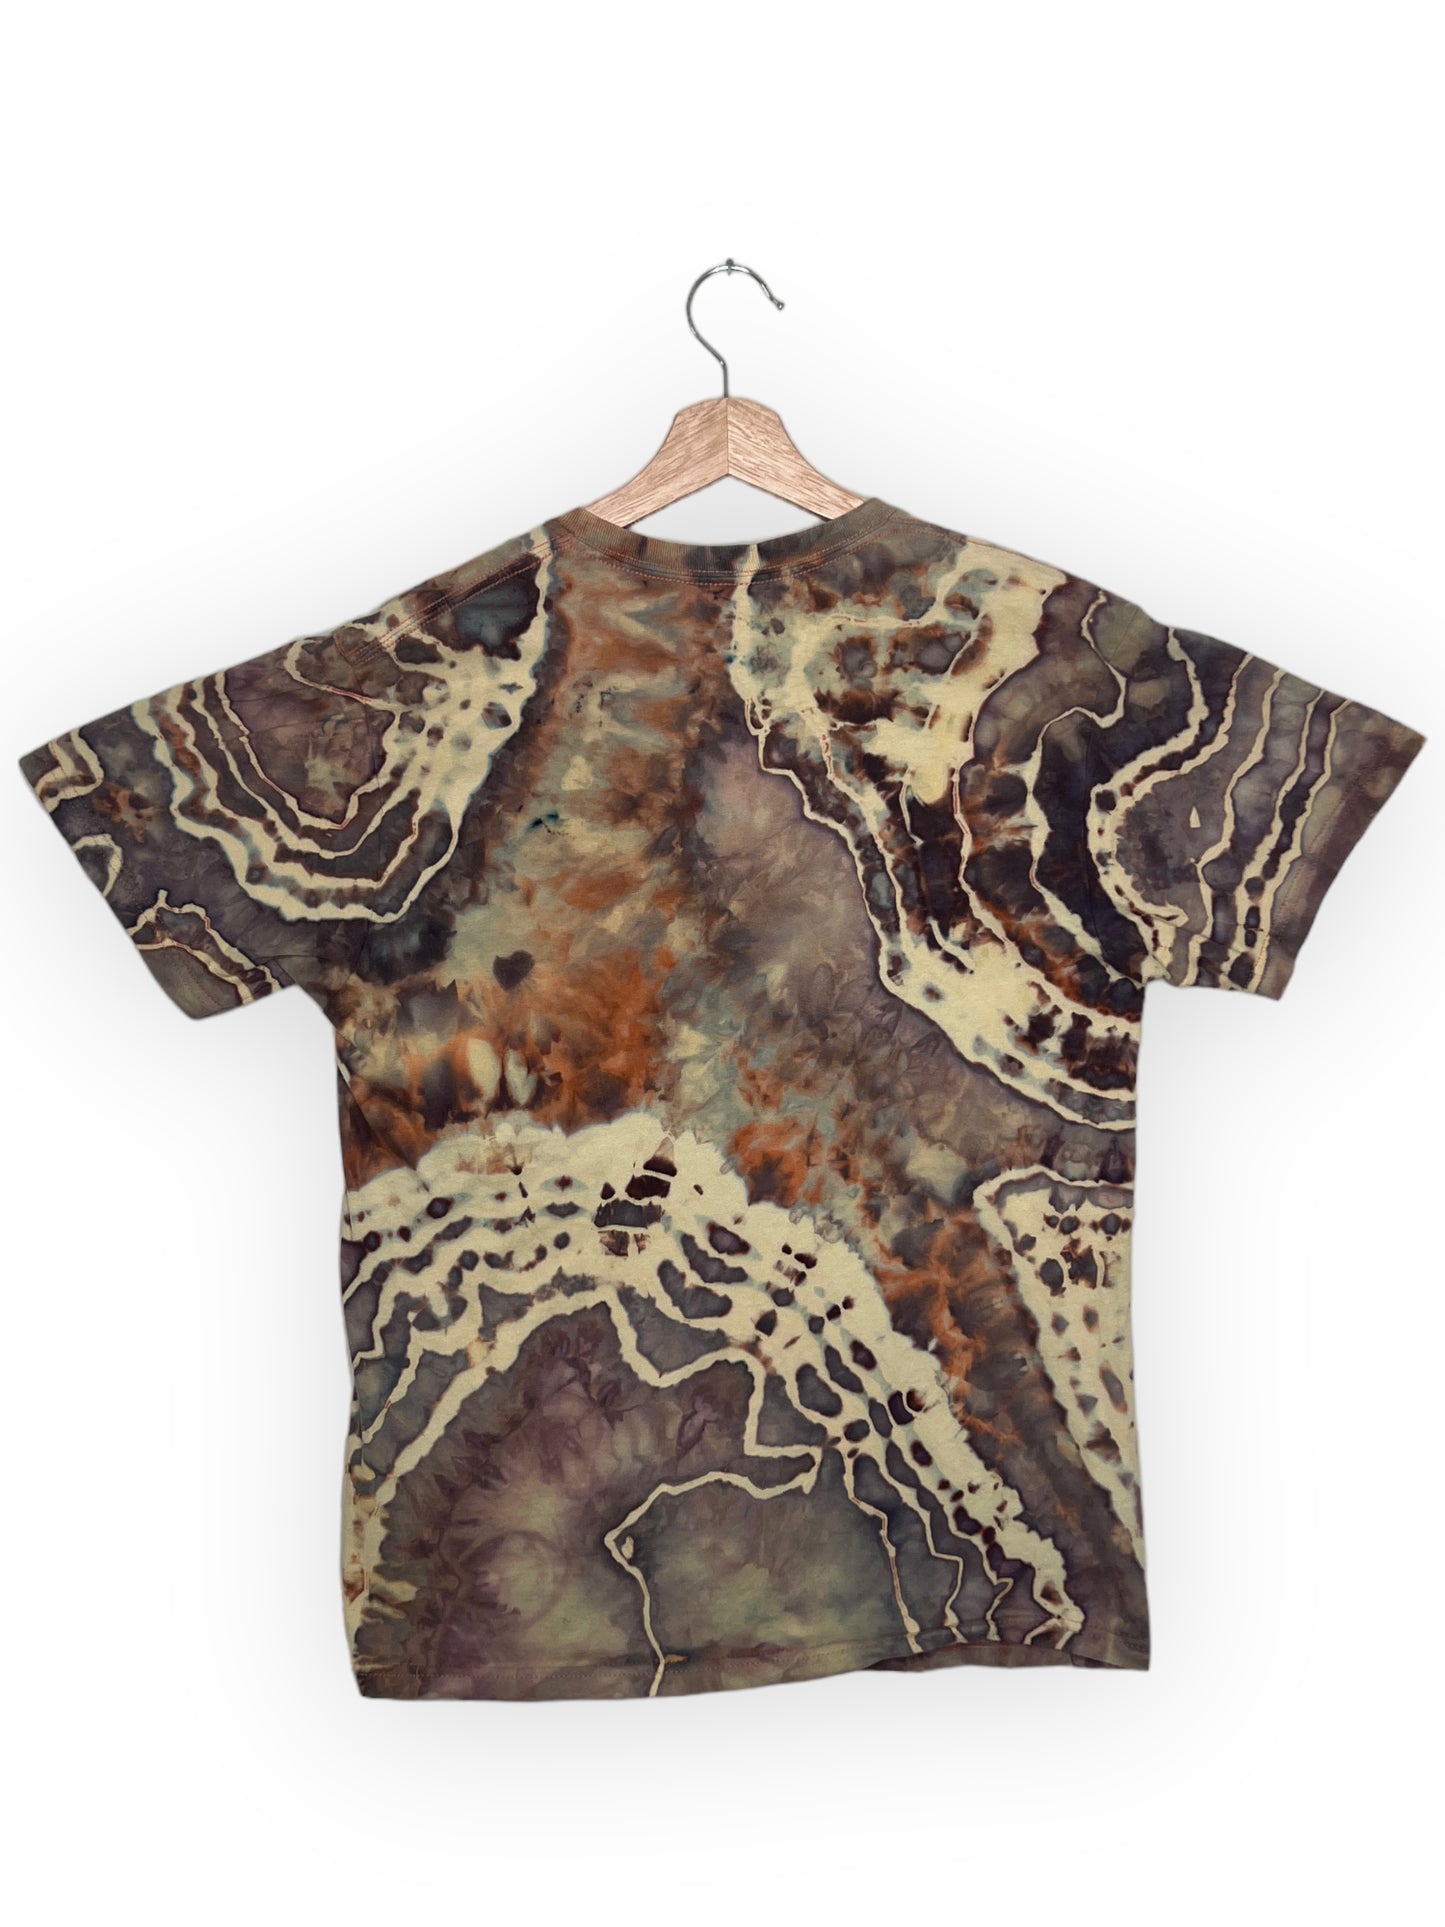 Rose Geode T-Shirt (Medium)